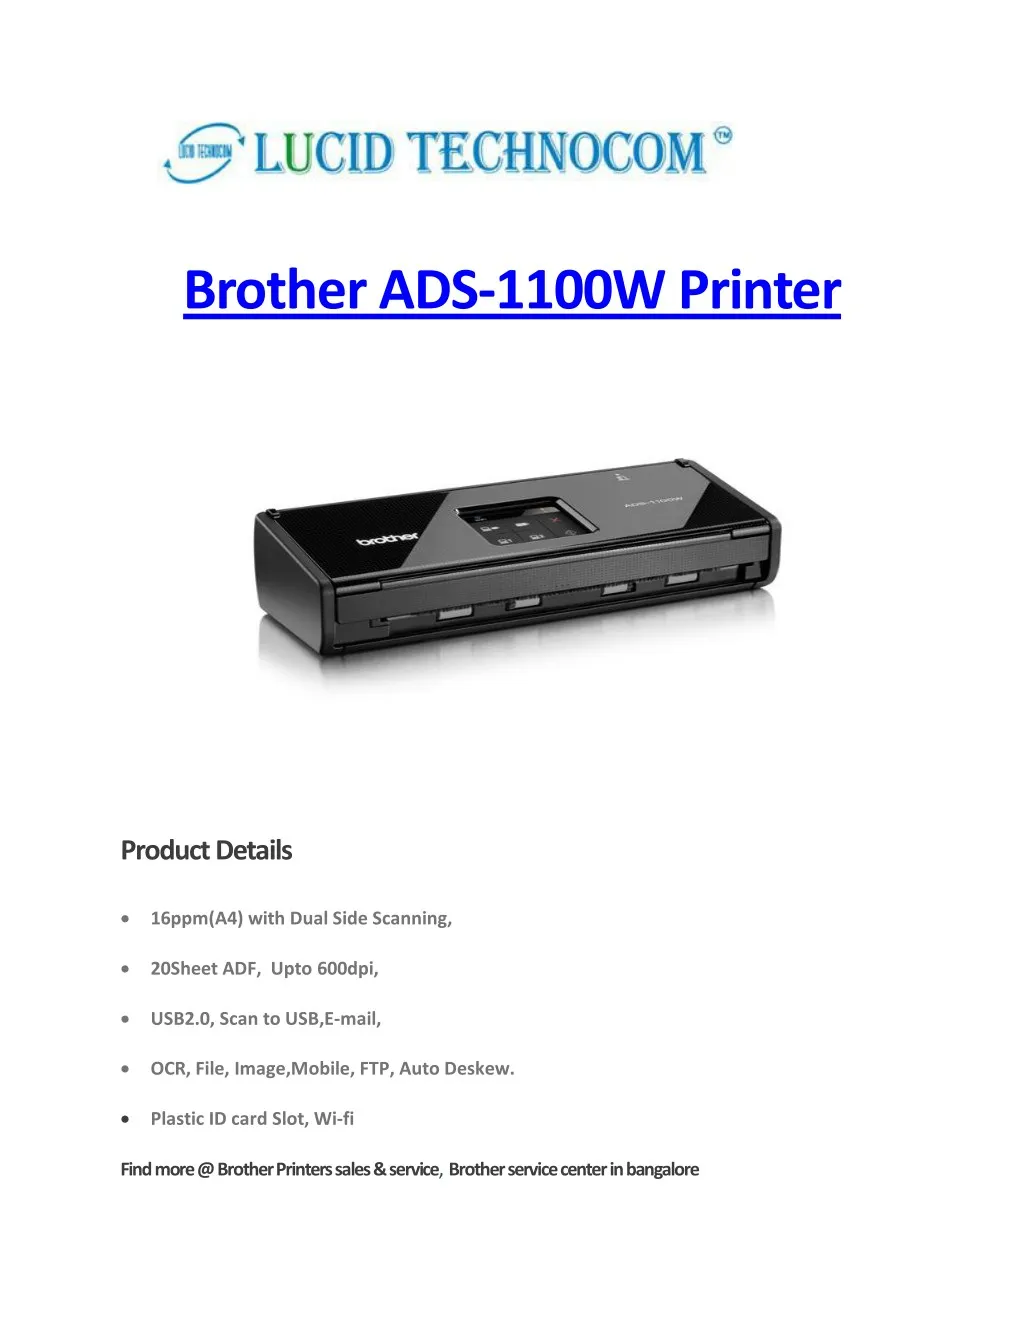 brother ads 1100w printer